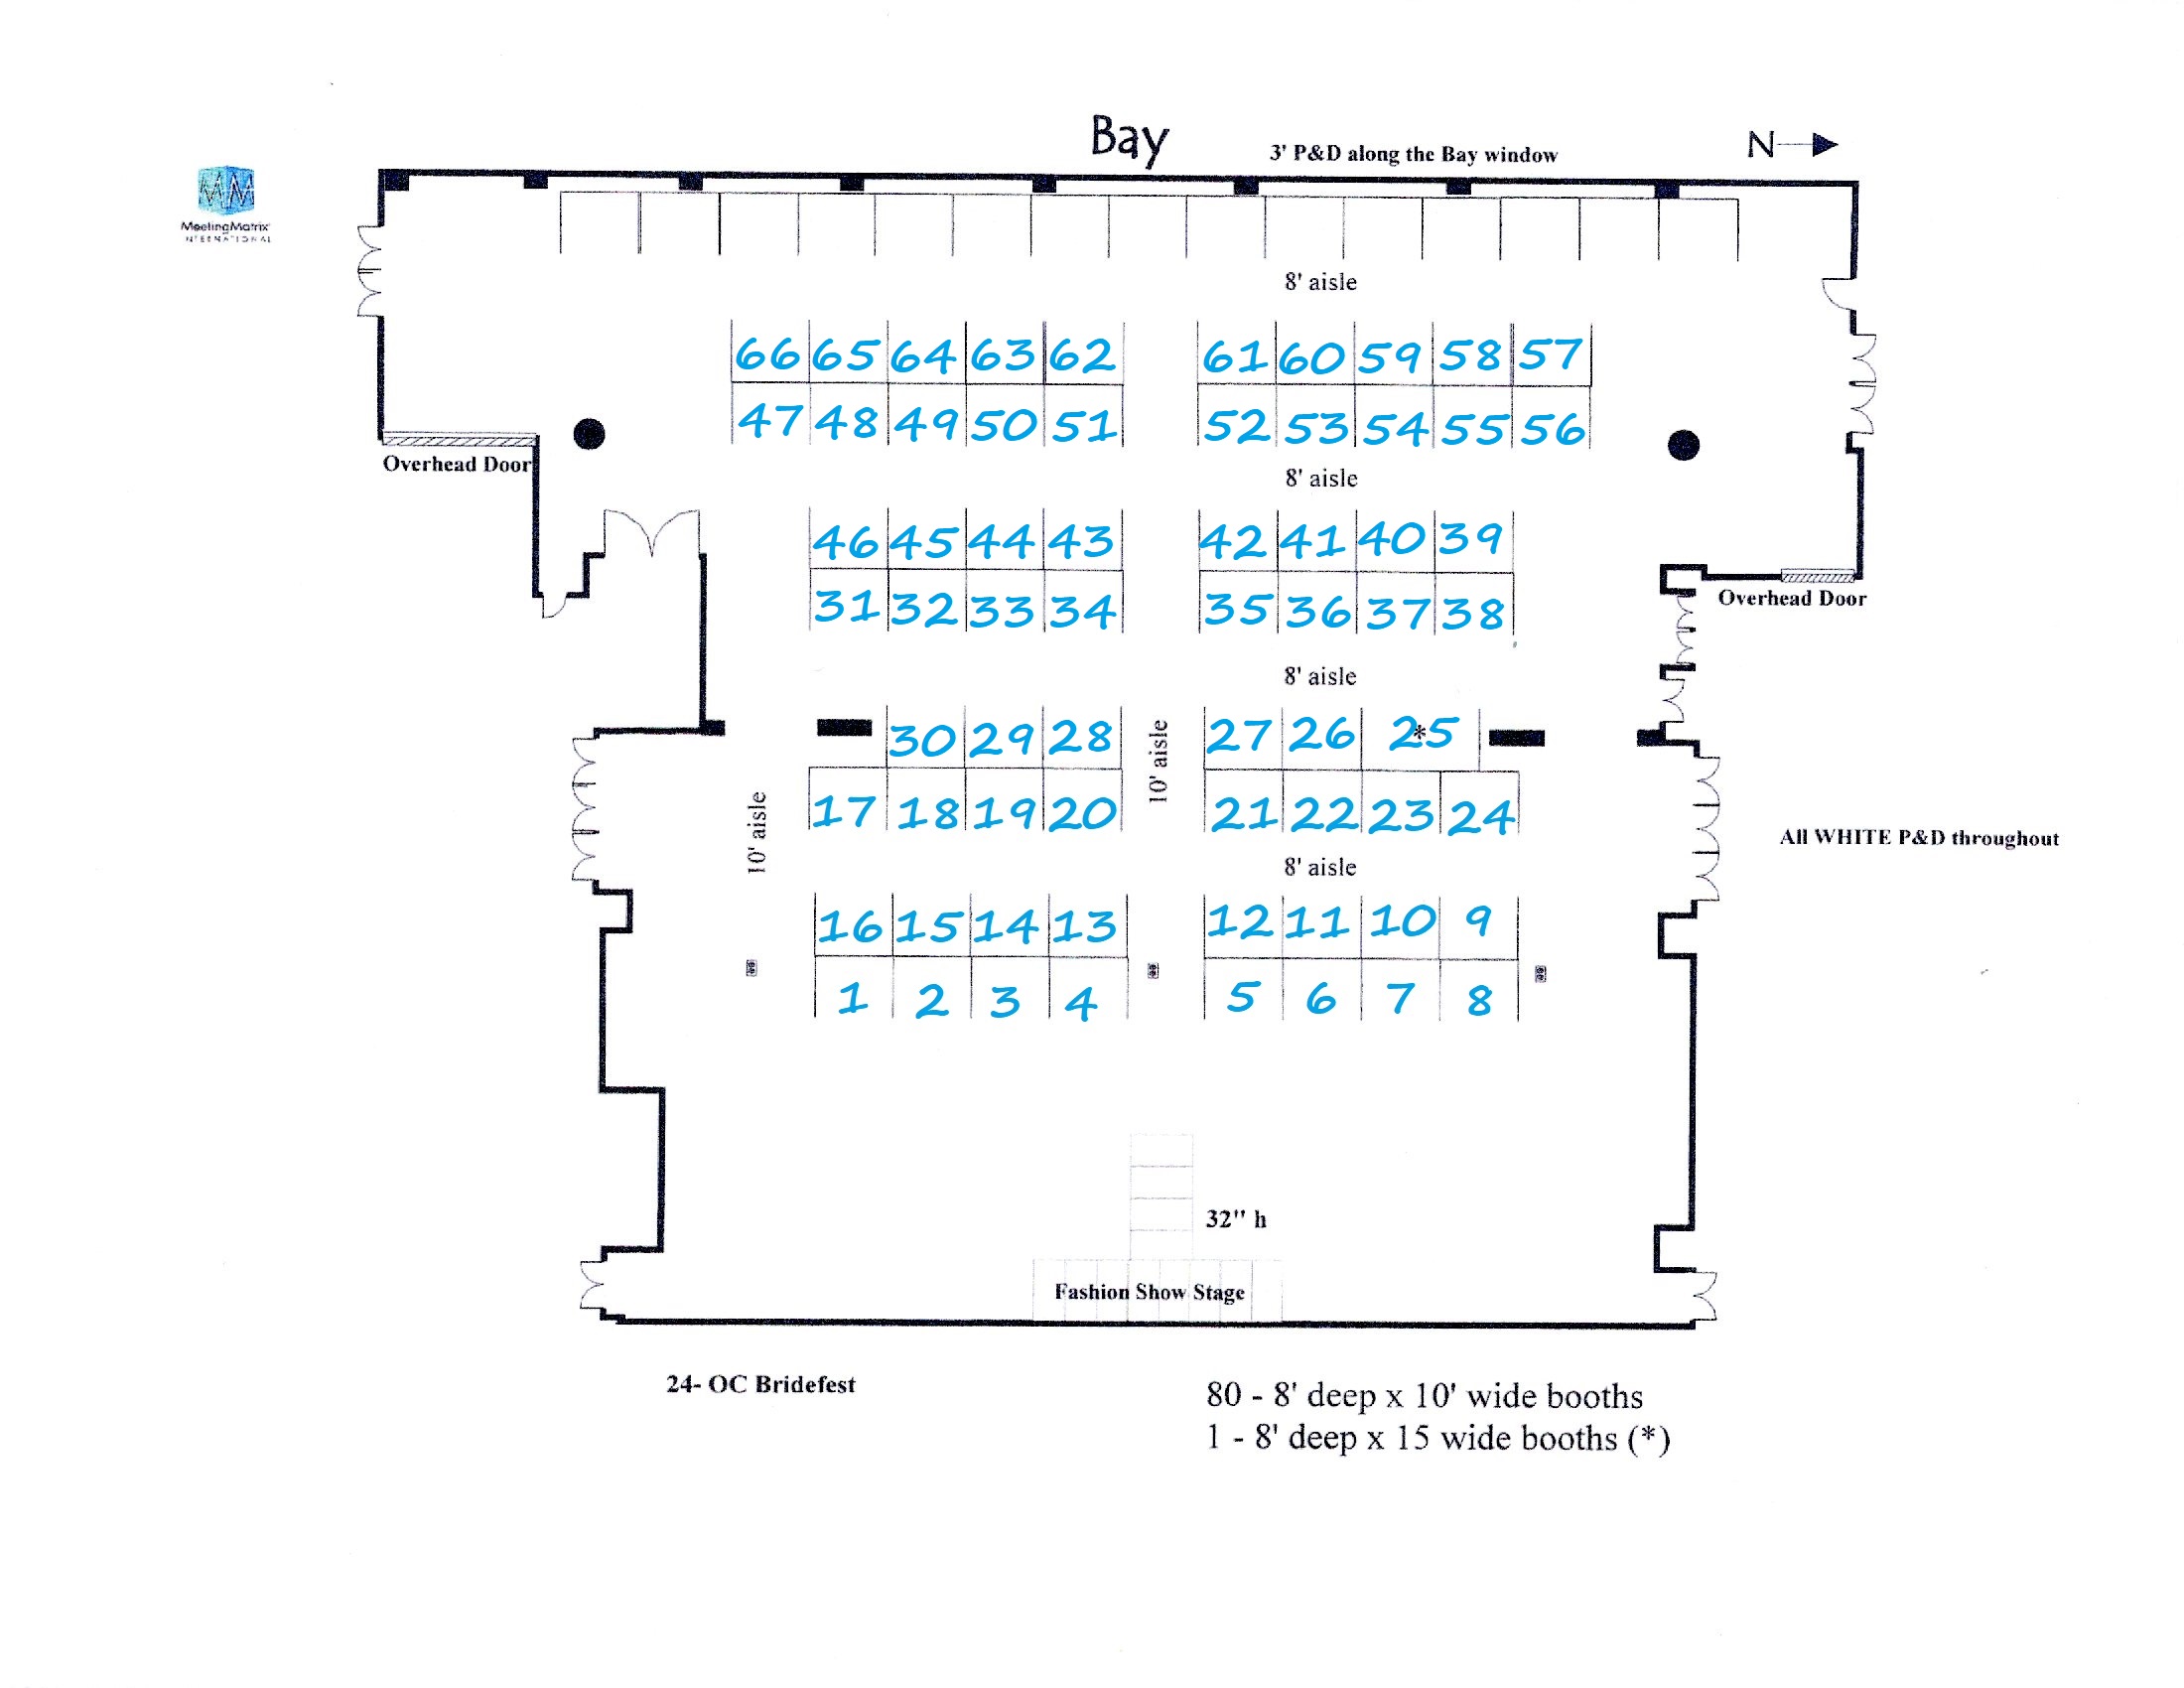 OC Bridefest Numbered Floor Plan